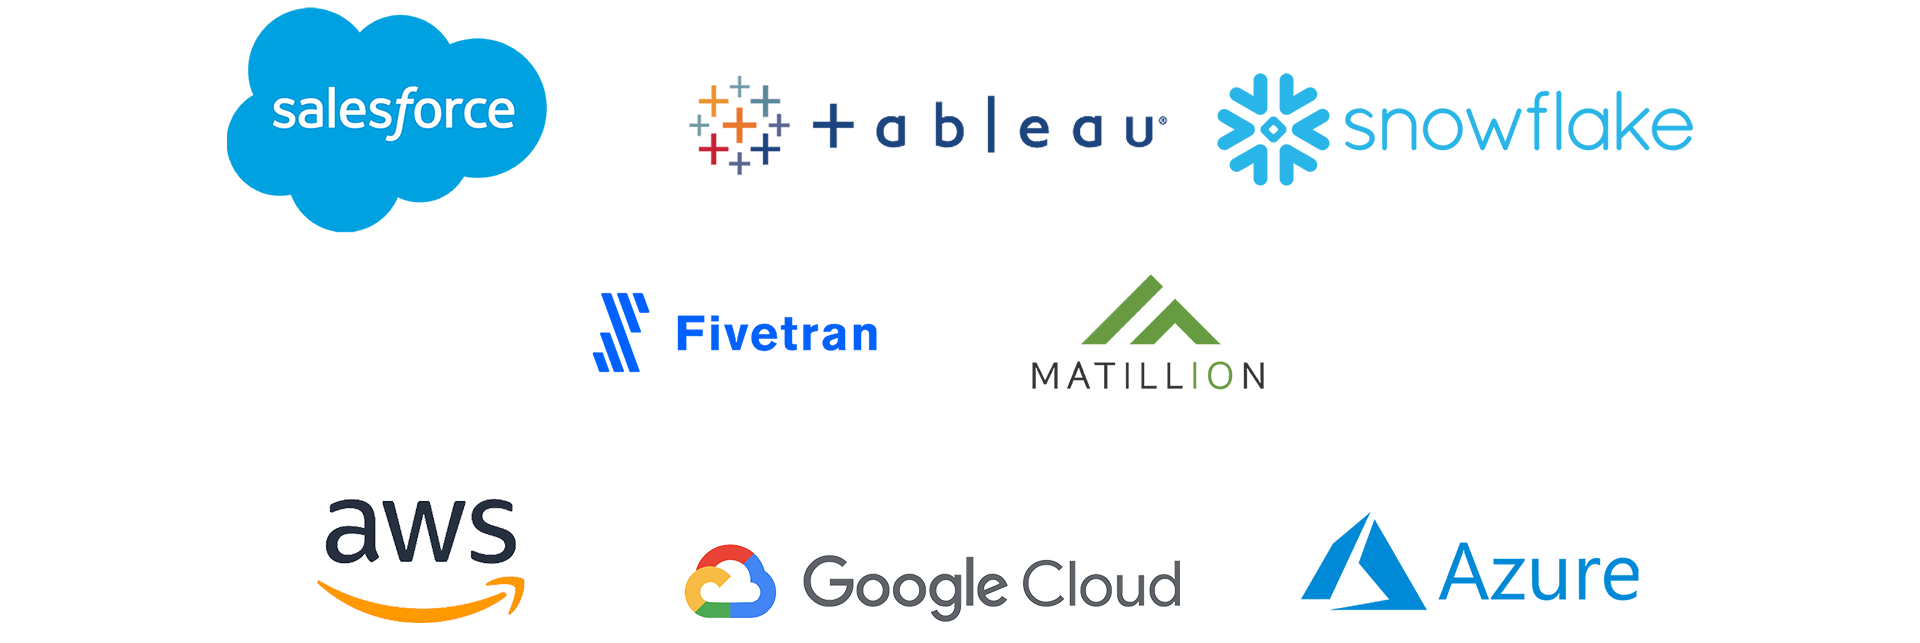 xeomatrix partners: salesforce, tableau, snowflake, fivetran, matillion, amazon web services, google cloud, and microsoft azure